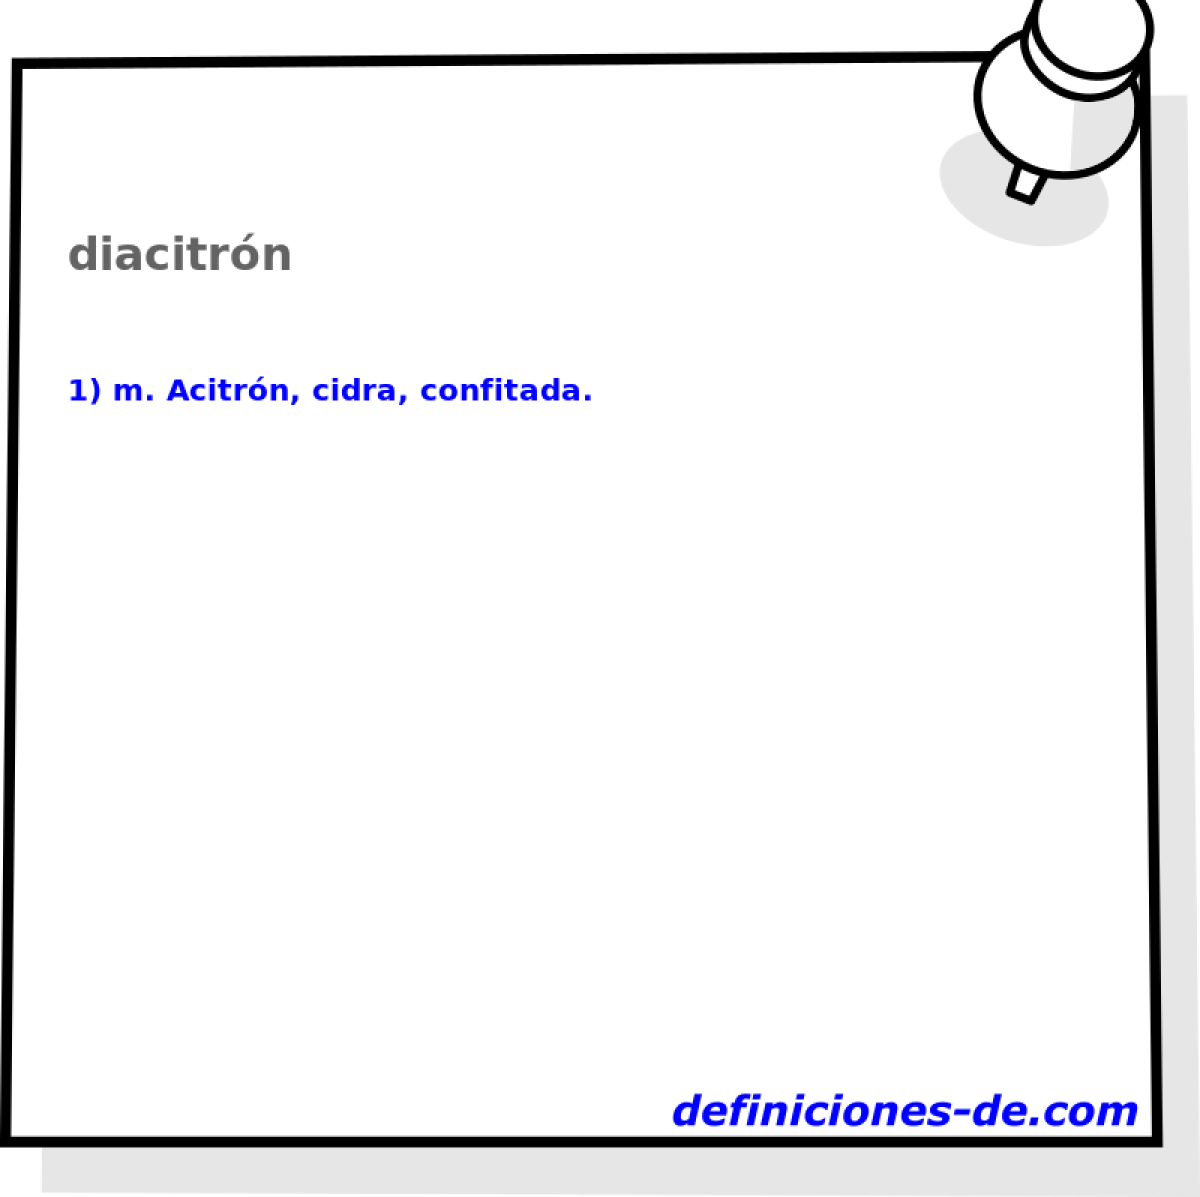 diacitrn 